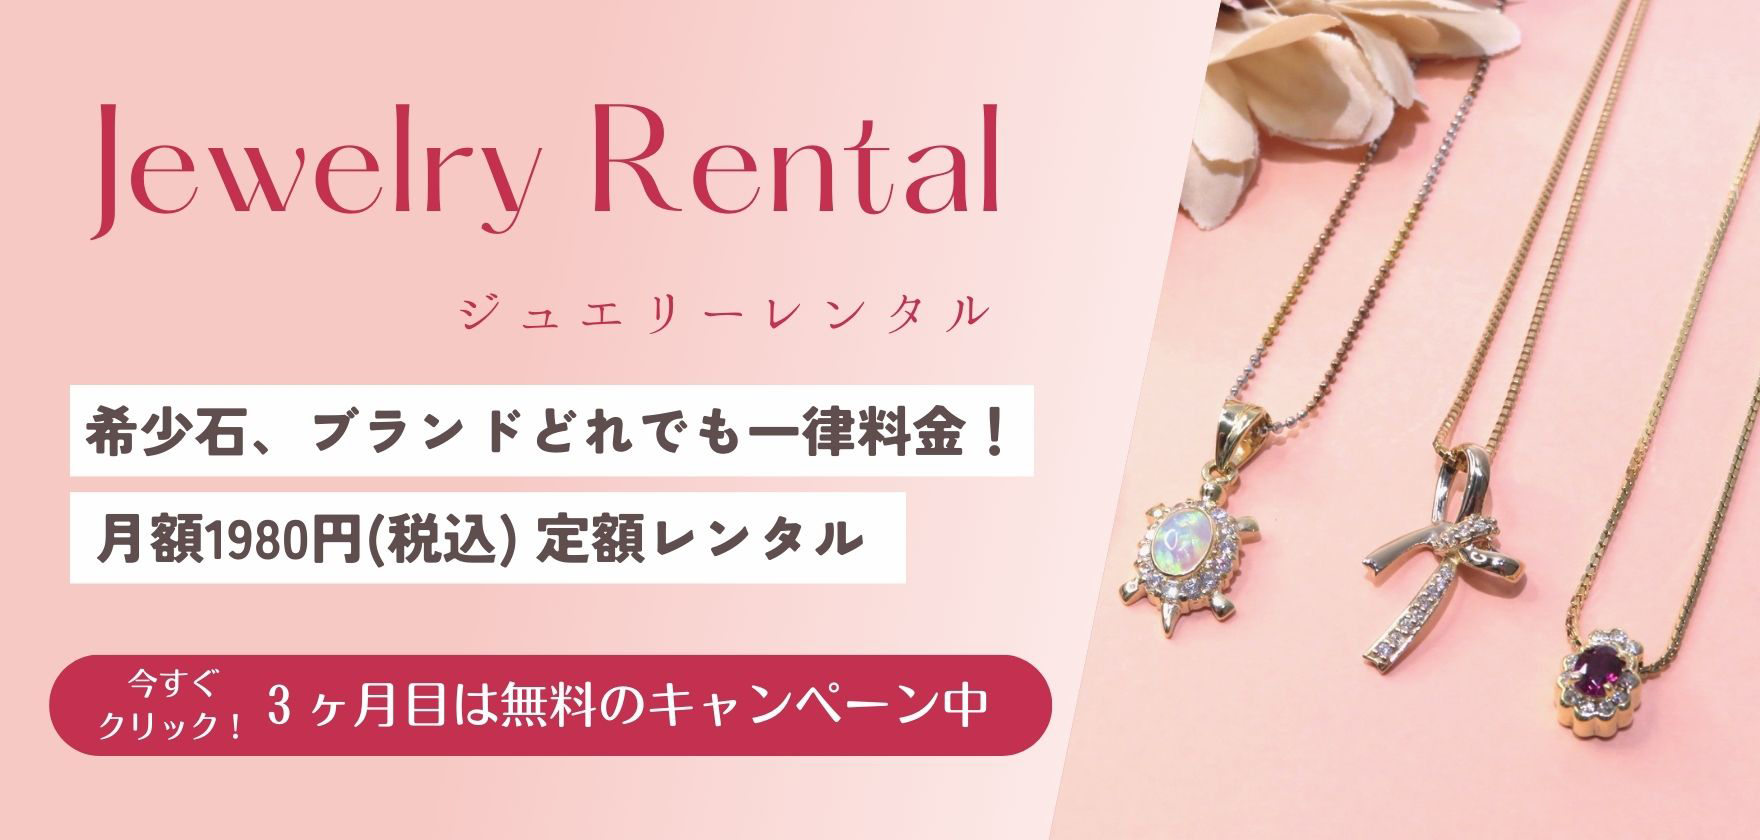 Jewelry rental（ジュエリーレンタル）サイト